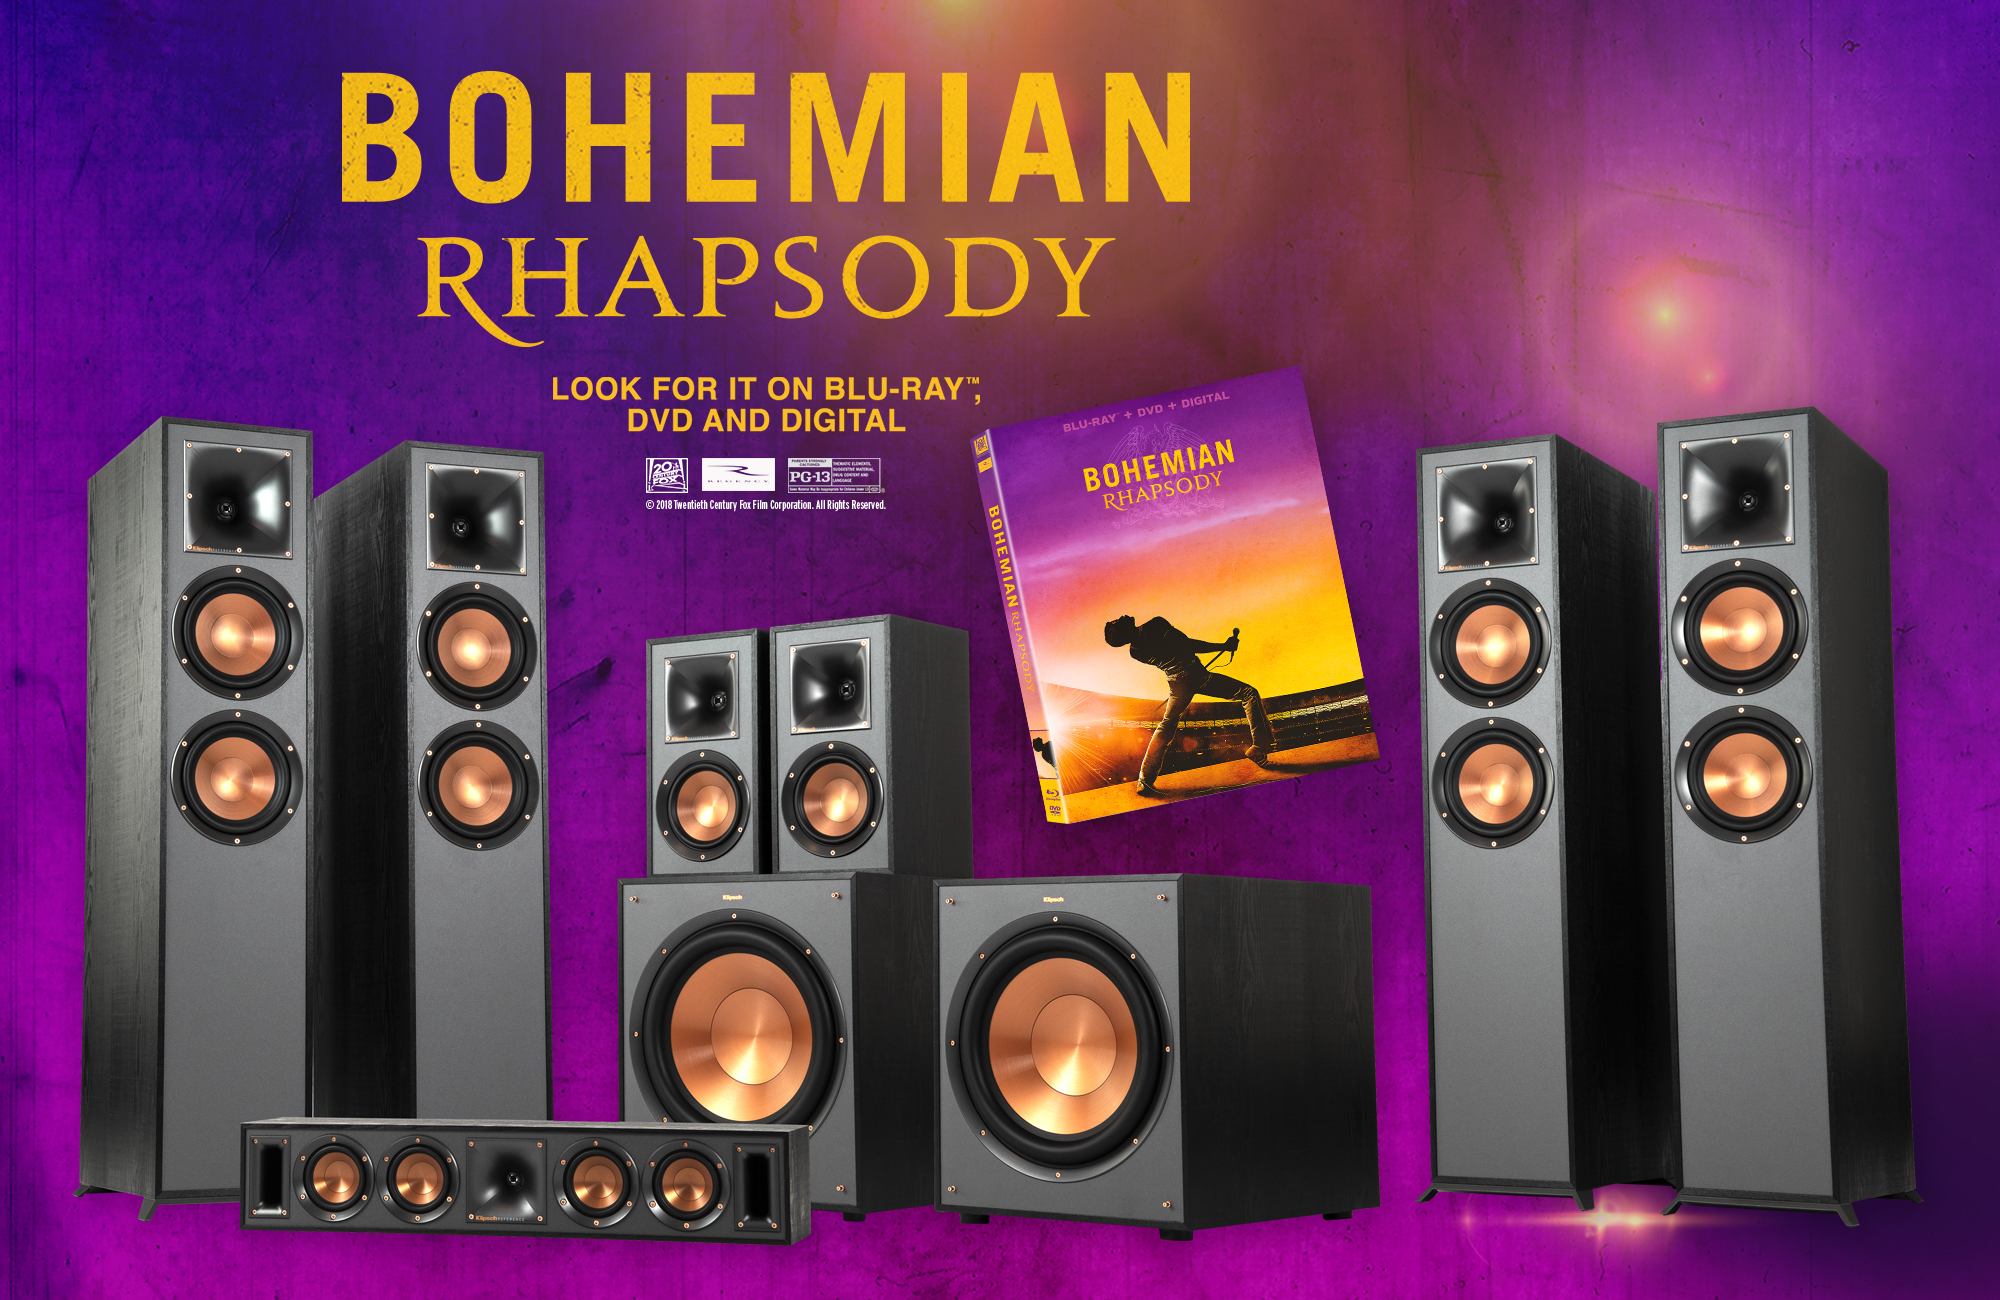 Bohemian Rhapsody instal the new